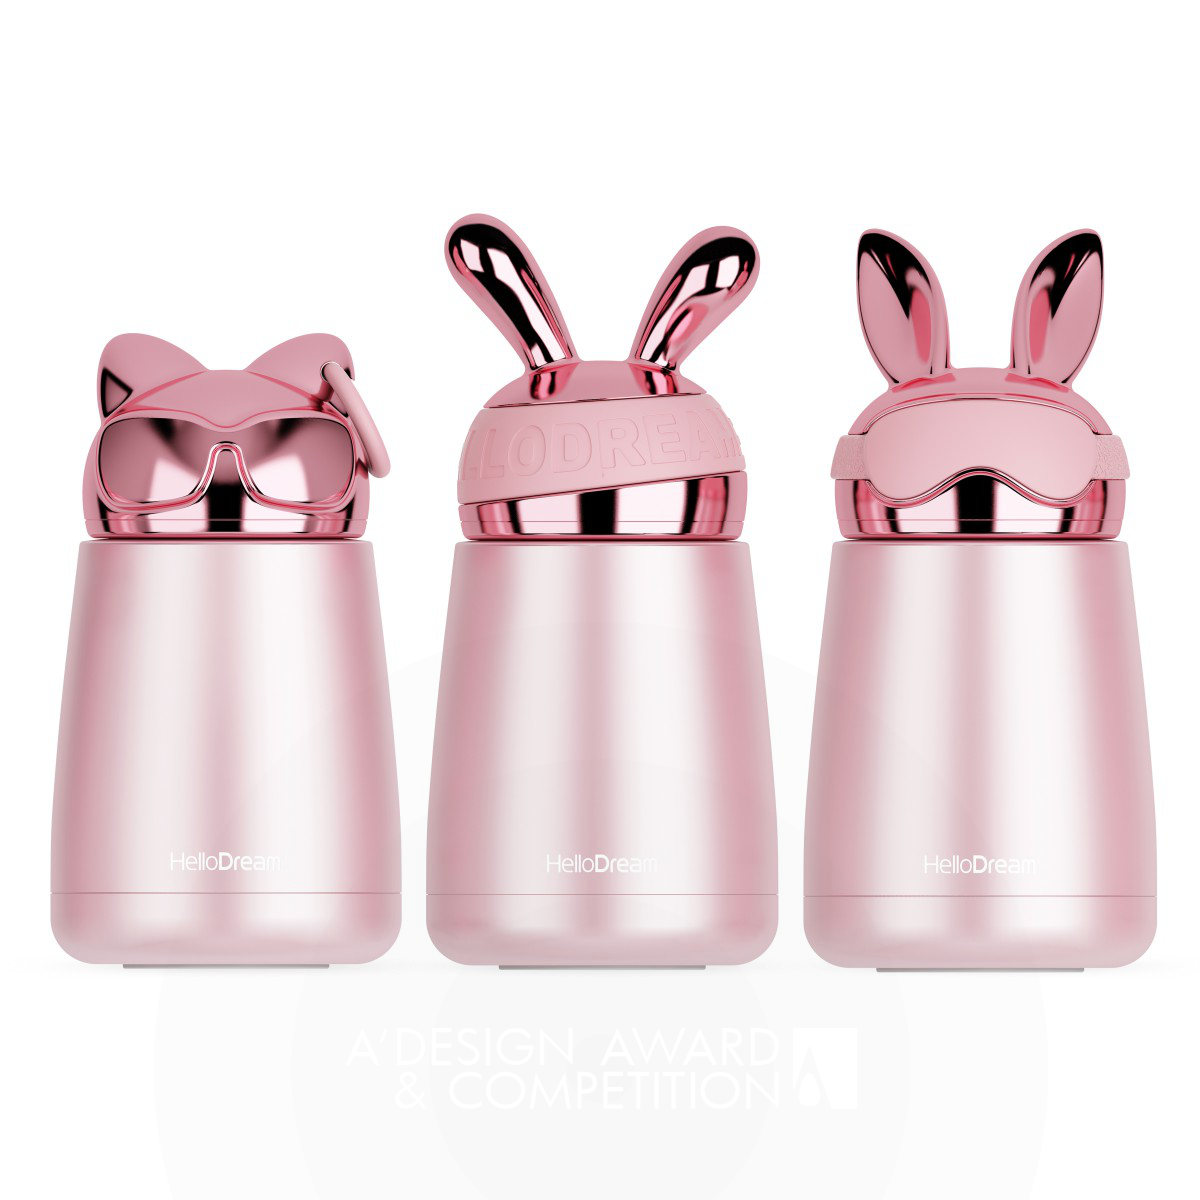 HelloDream Animals: Fashionable and Unique Vacuum Cups